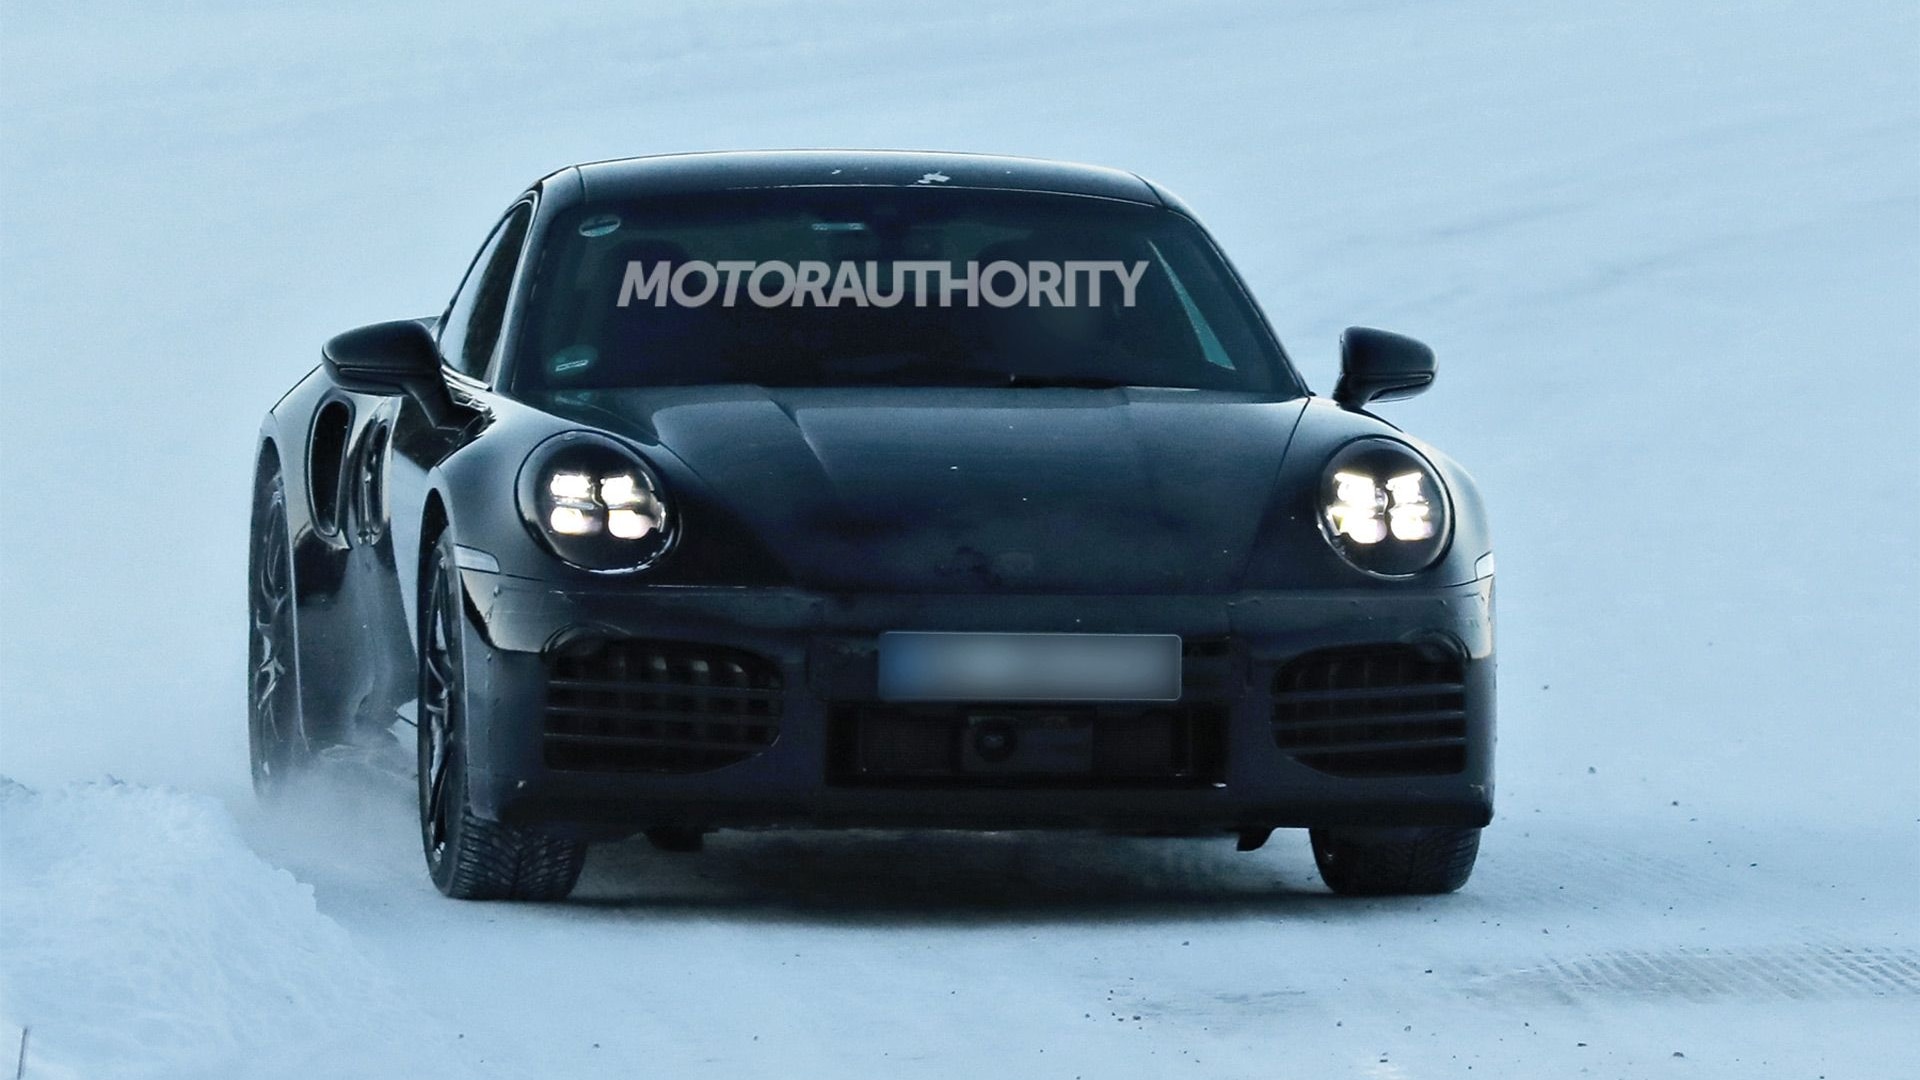 2025 Porsche 911 Turbo facelift spy shots - Photo credit: Baldauf